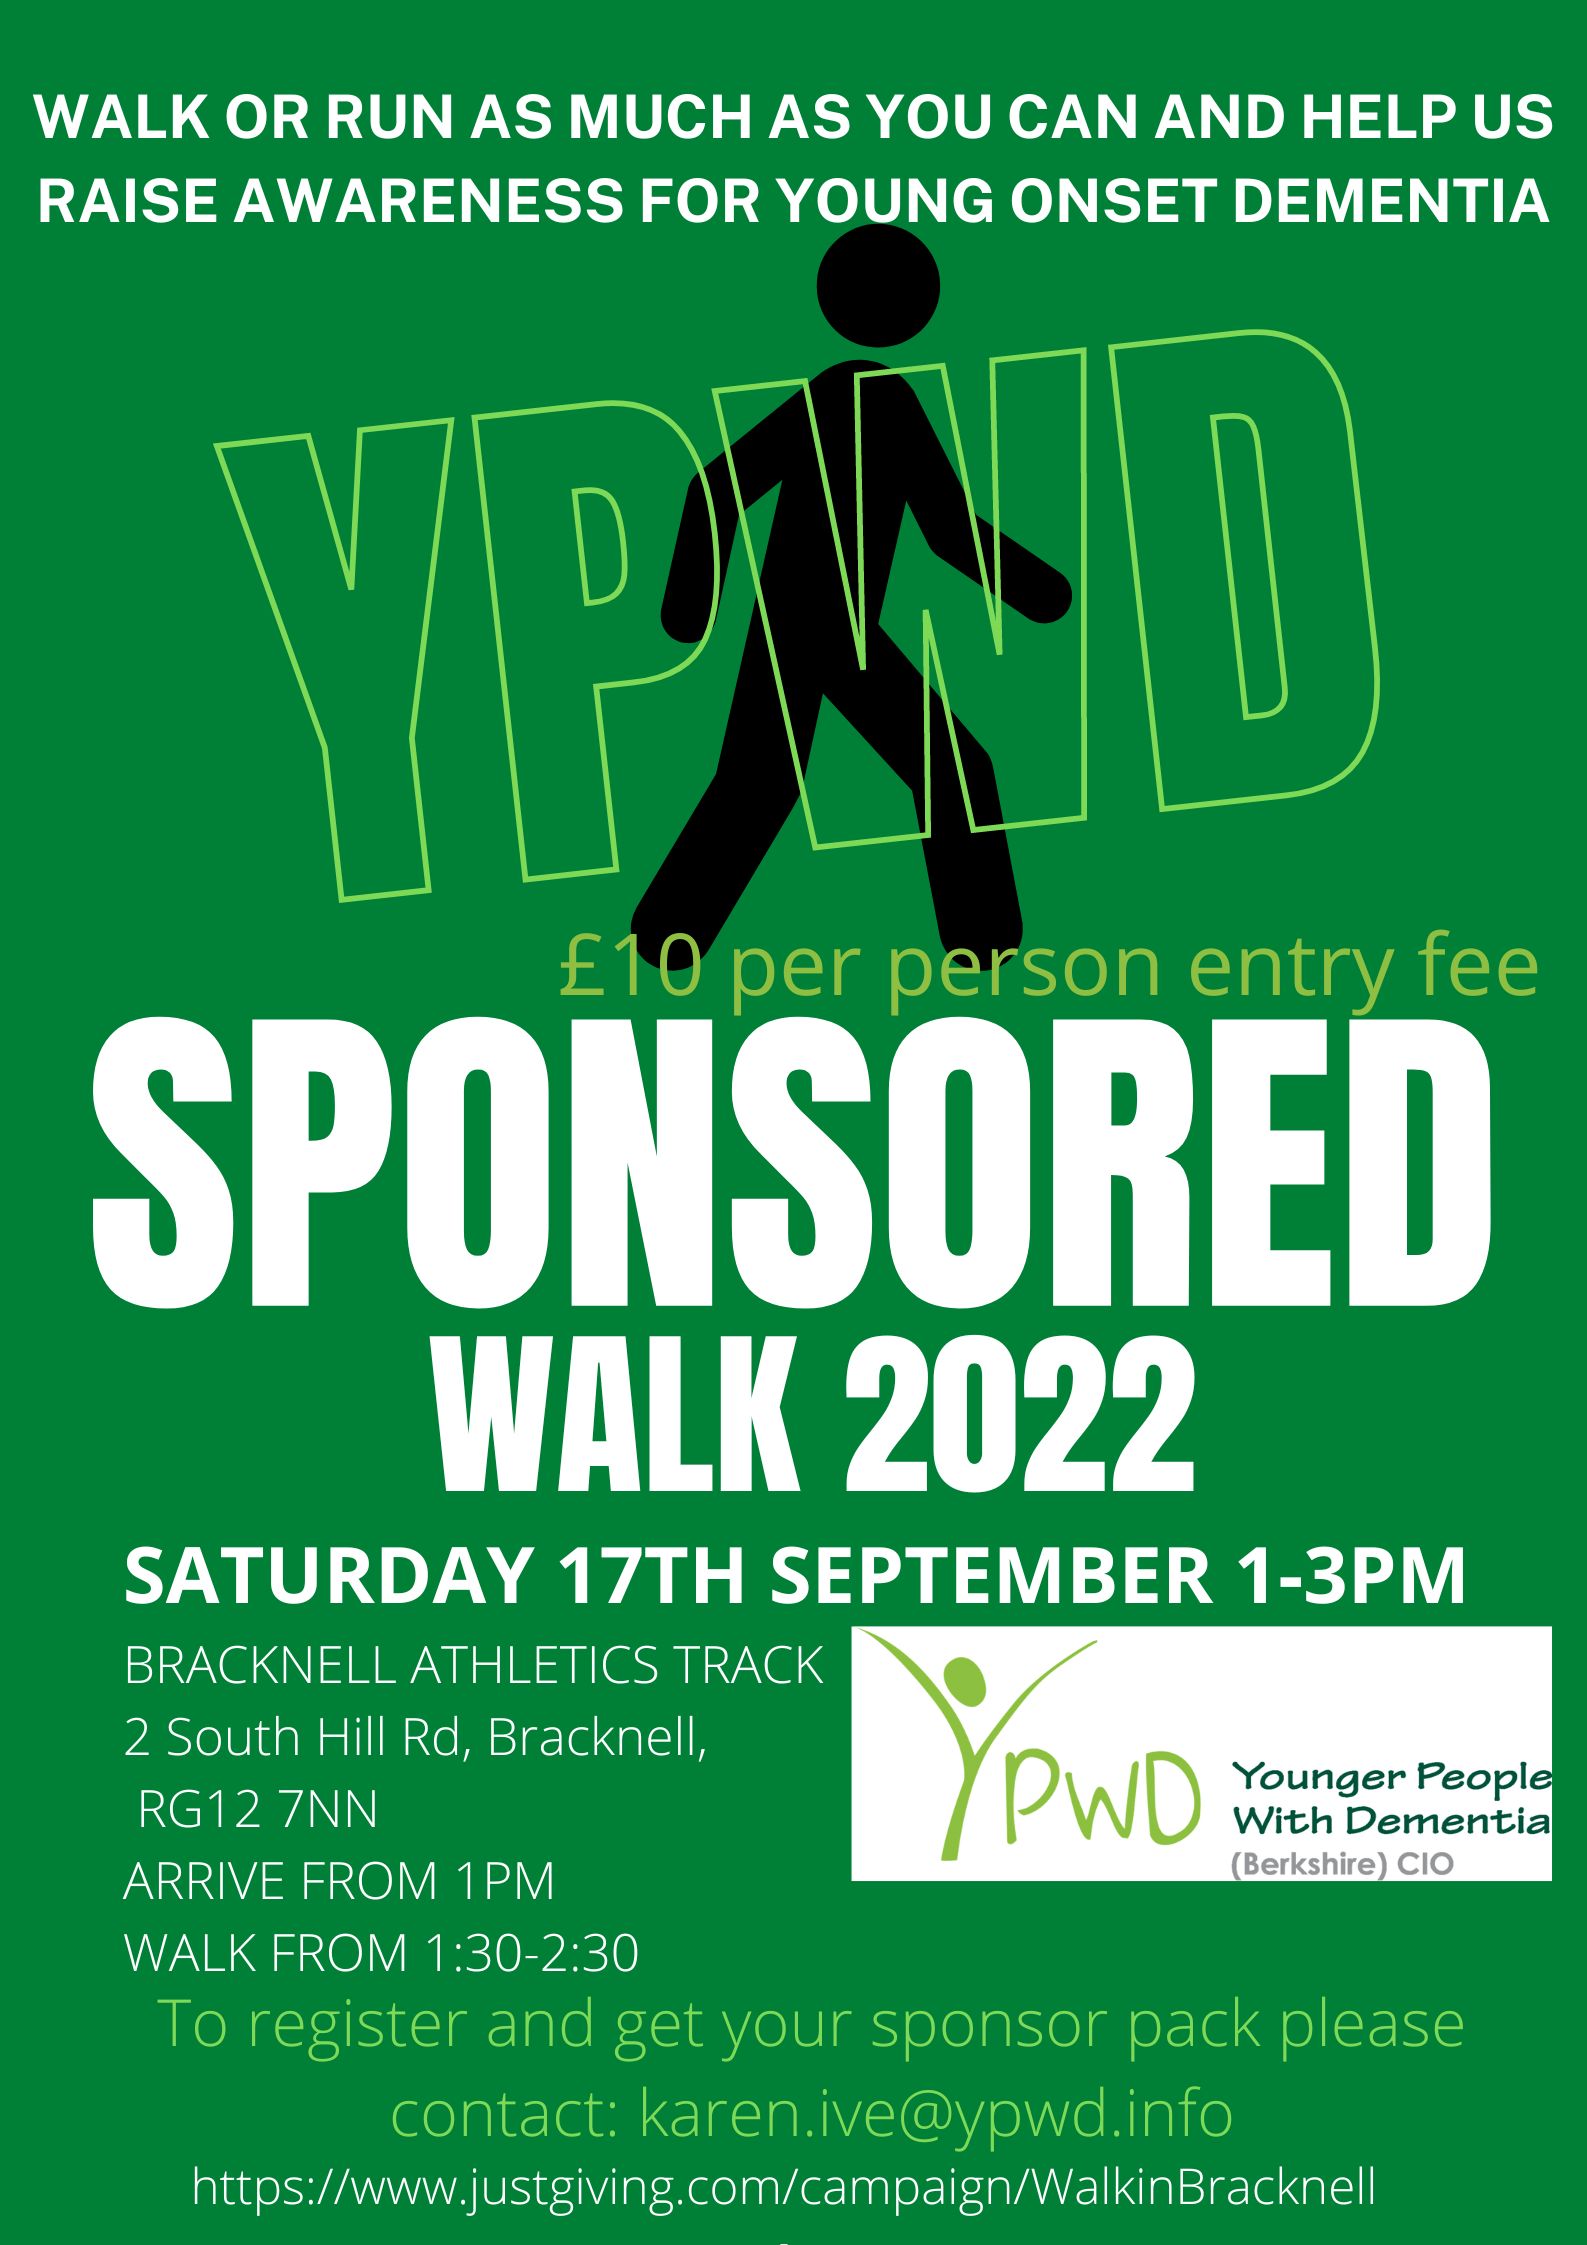 Poster giving details of sponsored walk